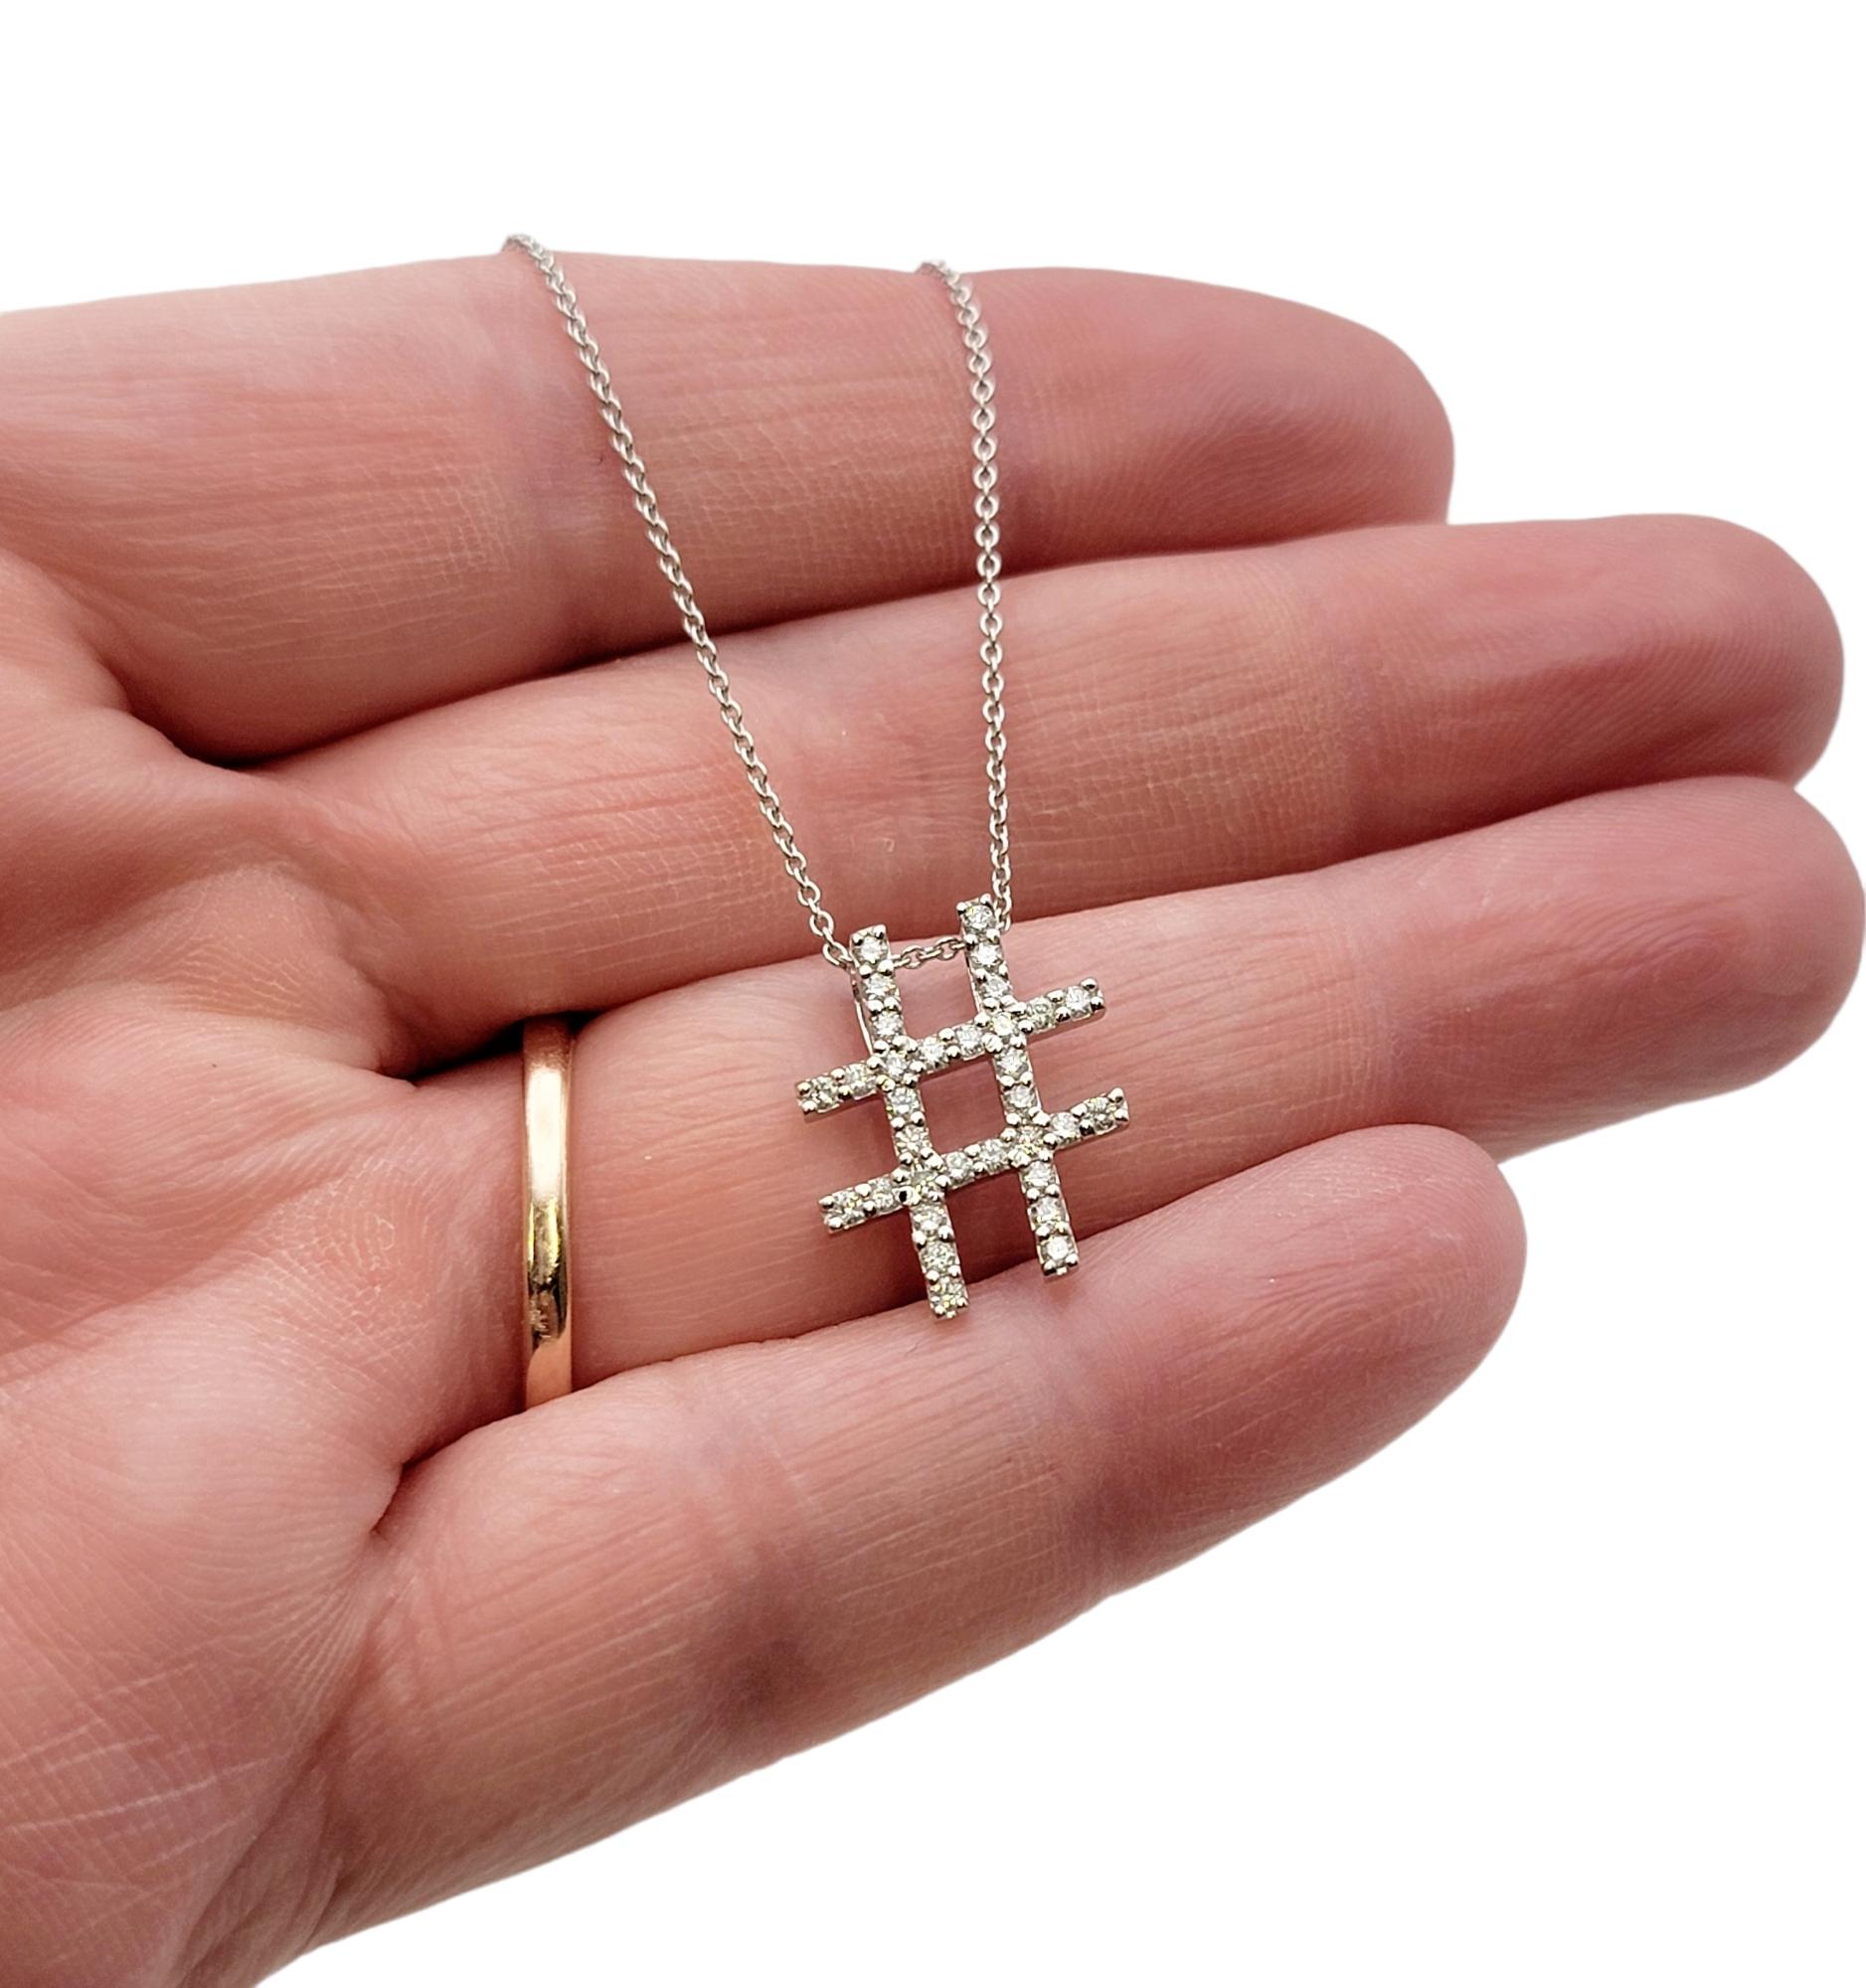 Roberto Coin Tiny Treasures Diamond Hashtag Pendant Necklace 18 Karat White Gold In Good Condition For Sale In Scottsdale, AZ